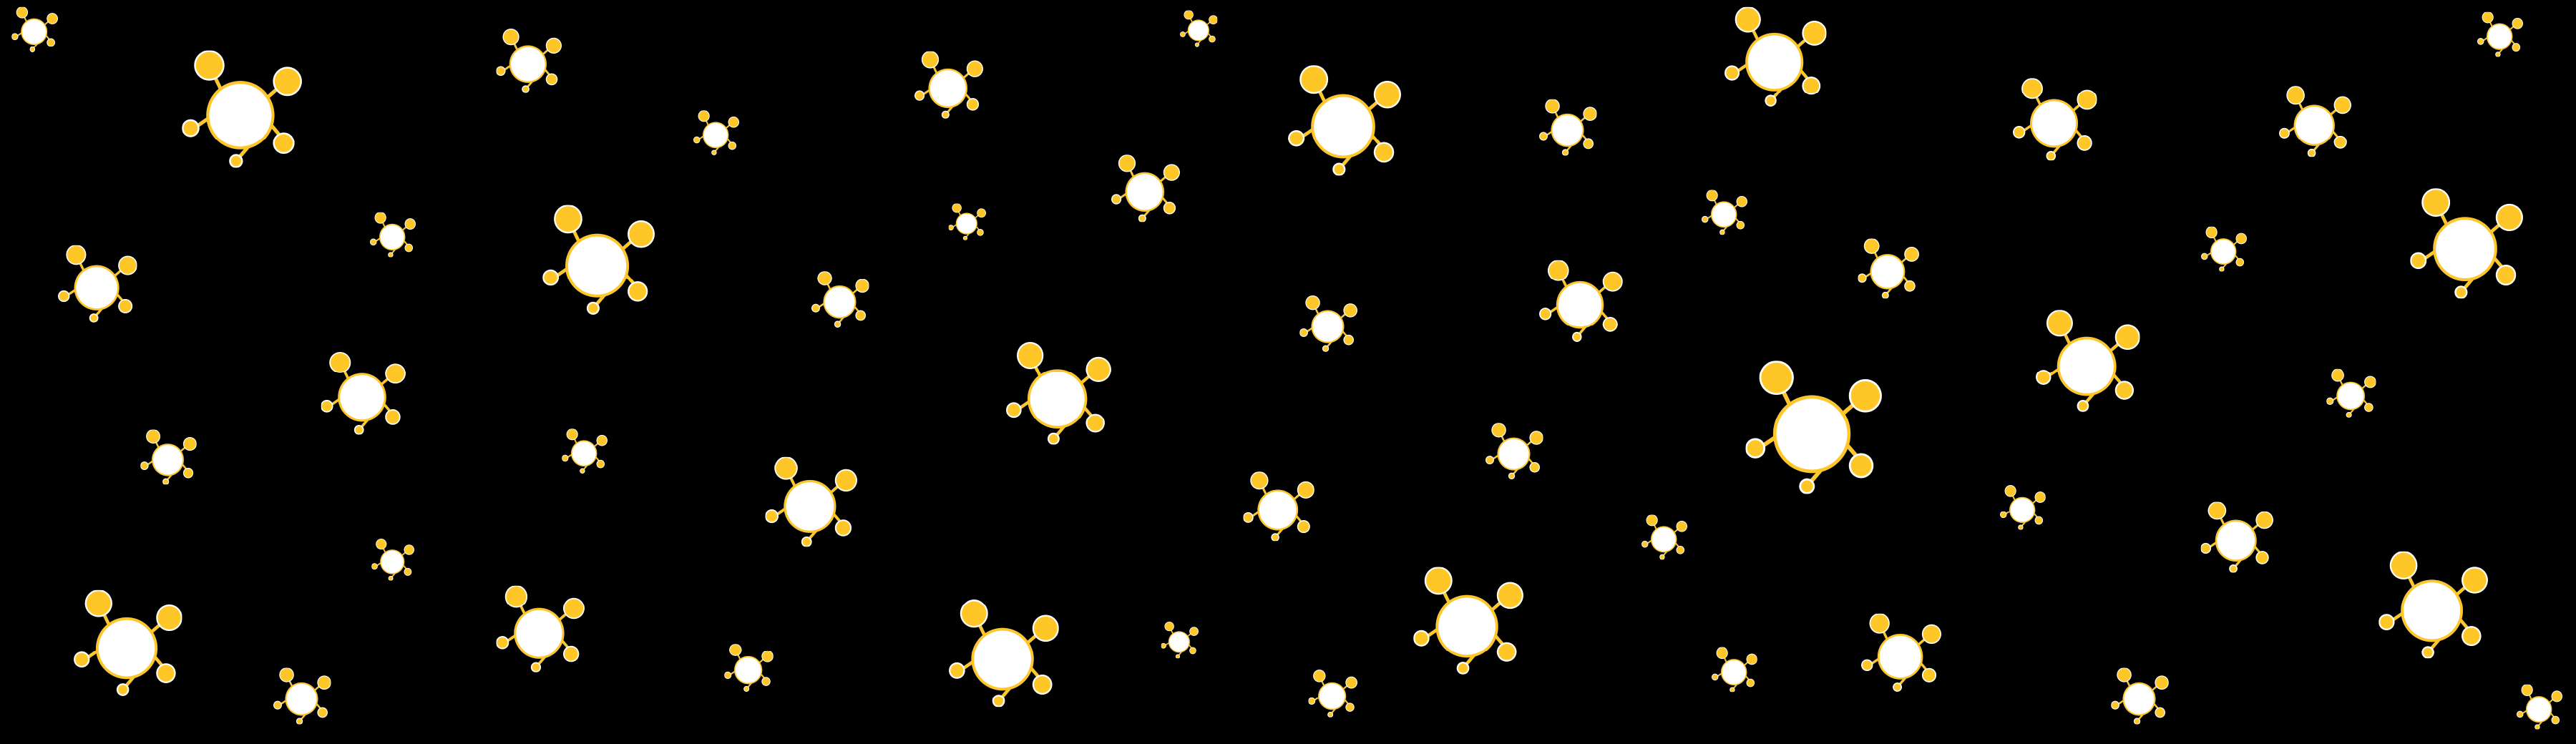 molecules of yellow light